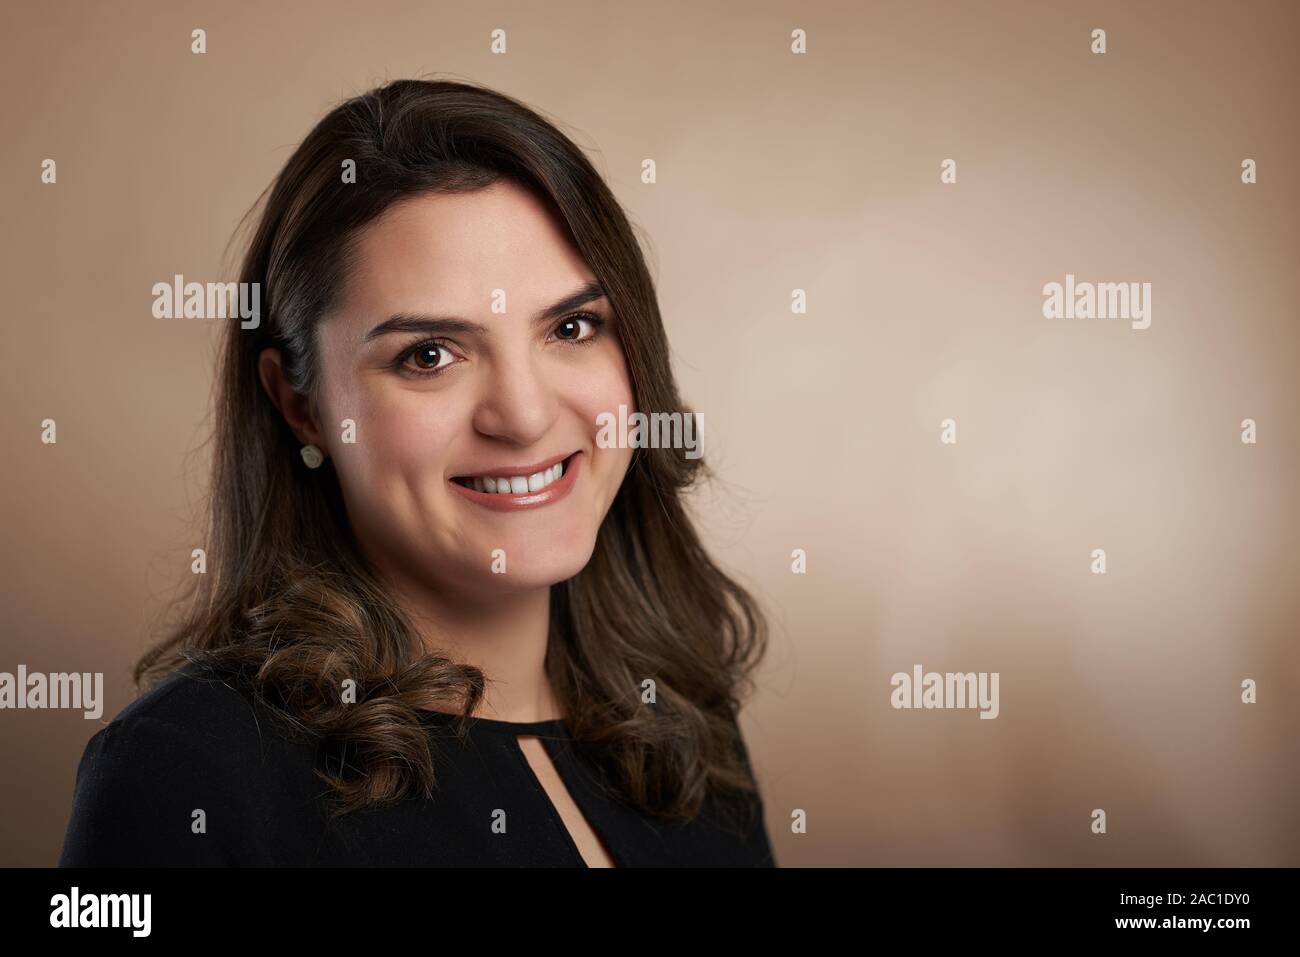 Profile portrait for social media of smiling latin woman Stock Photo